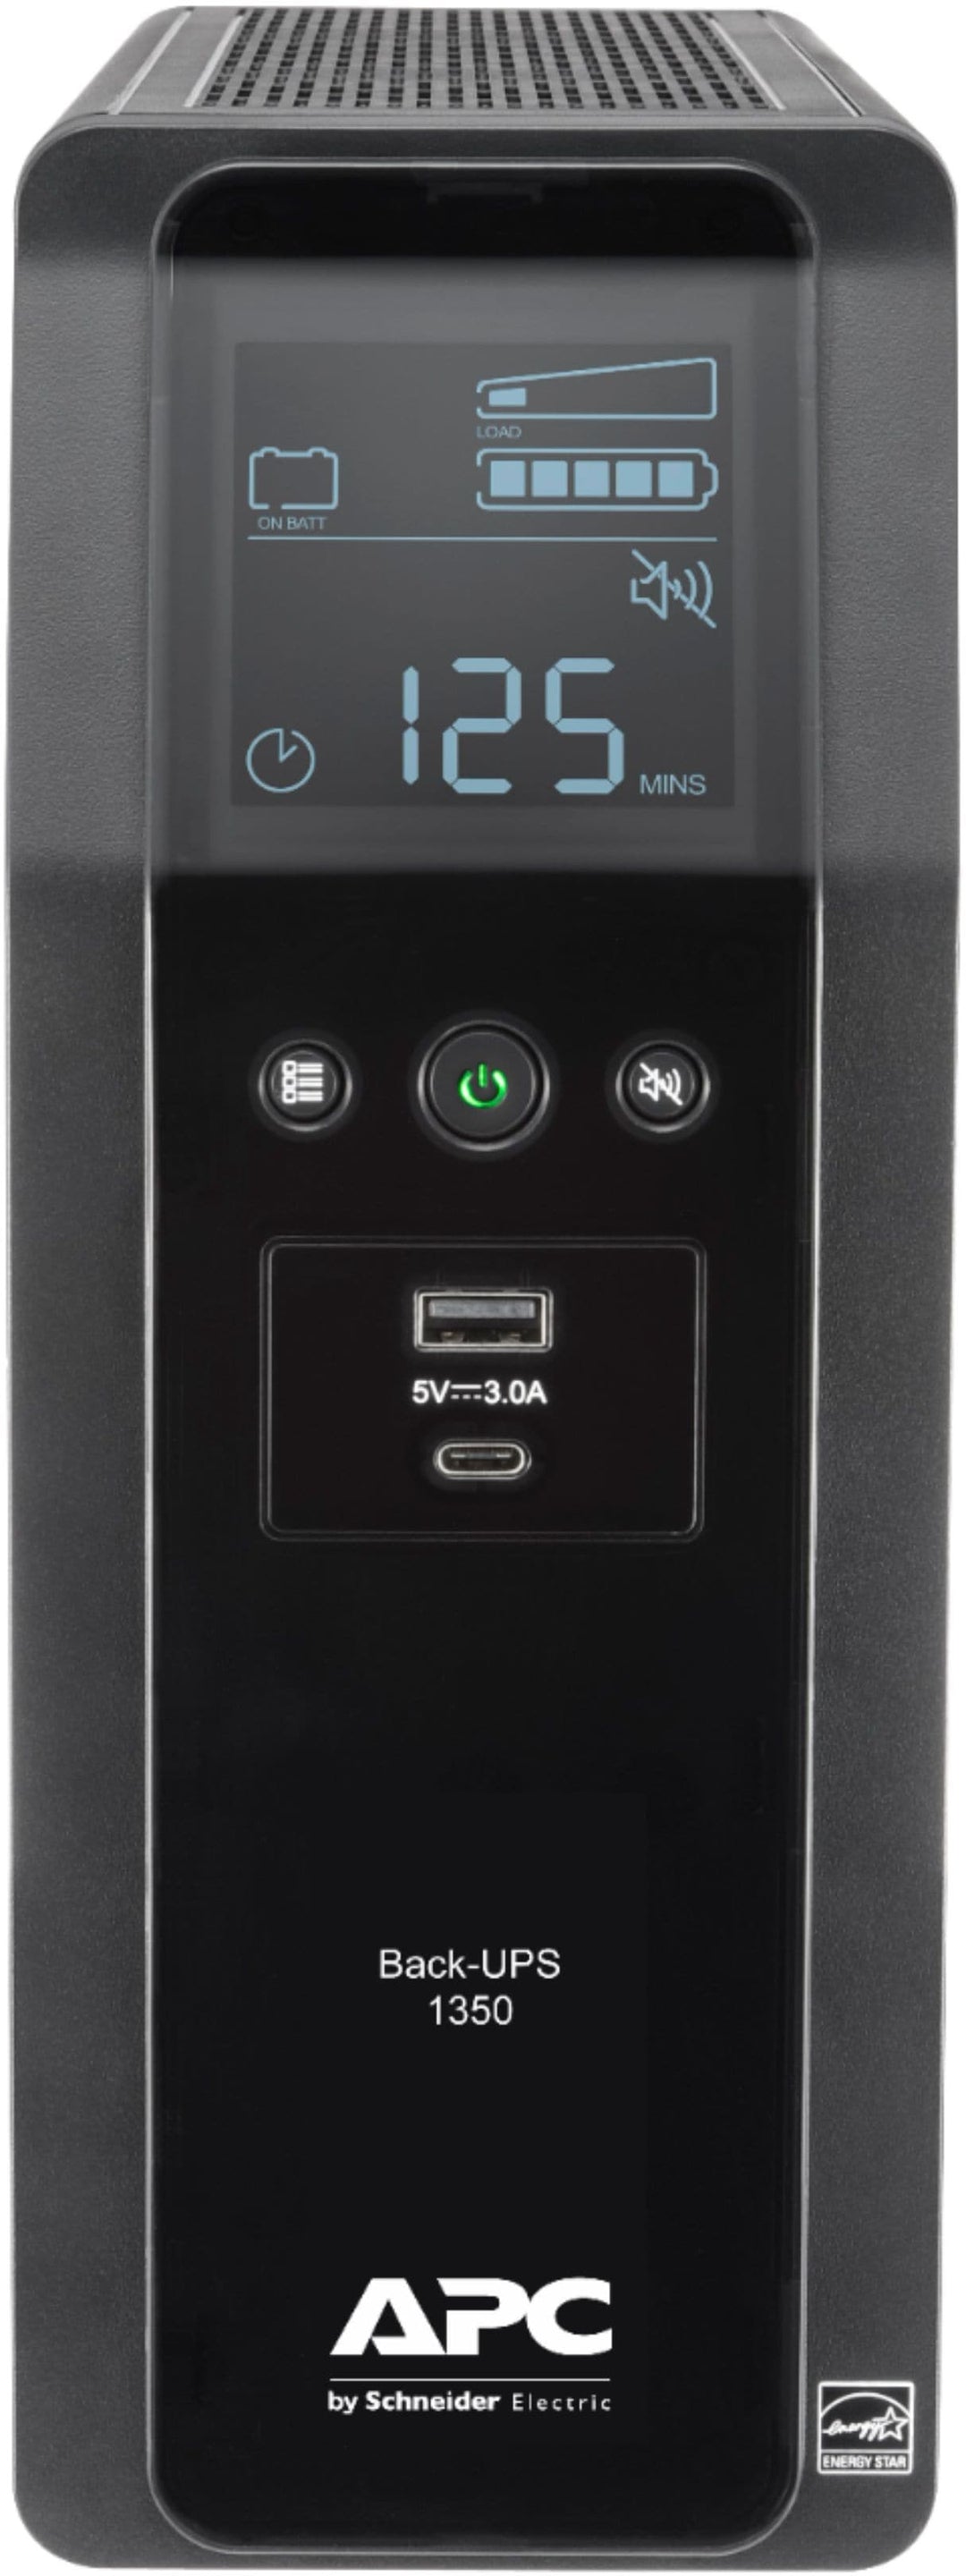 APC - Back-UPS Pro 1350VA 10-Outlet/2-USB Battery Back-Up and Surge Protector - Black_1